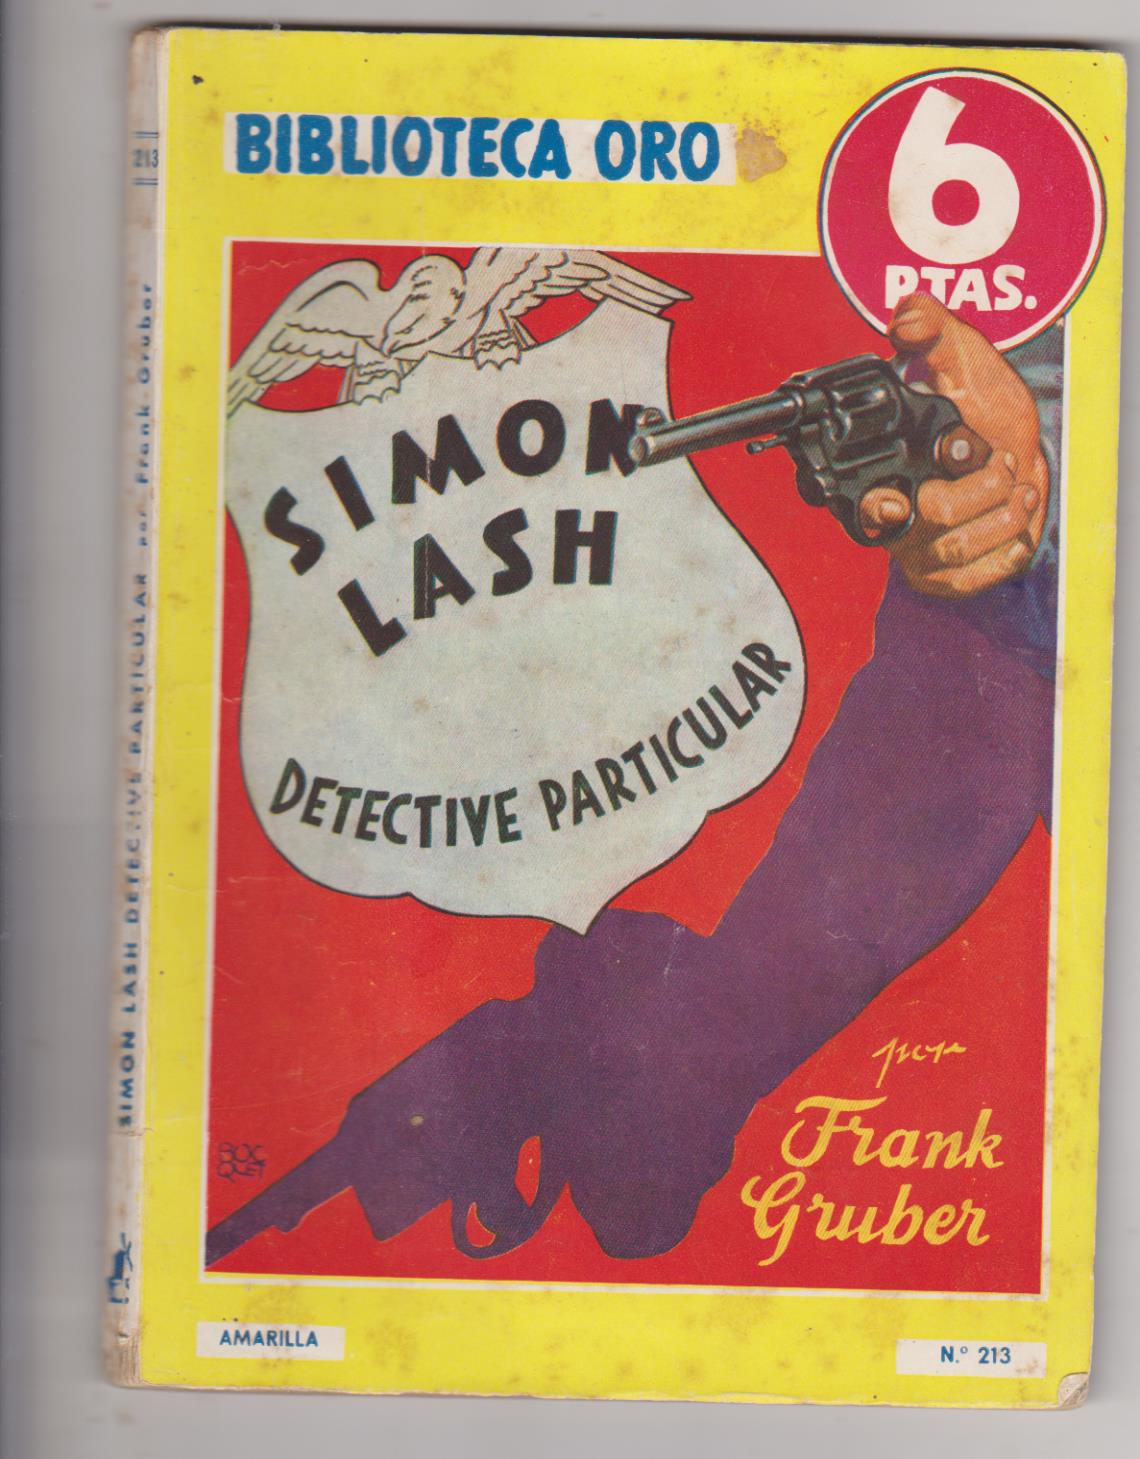 Biblioteca Oro nº 213. Simon lash. Detective particular por Frank Gruber. Molino 1947